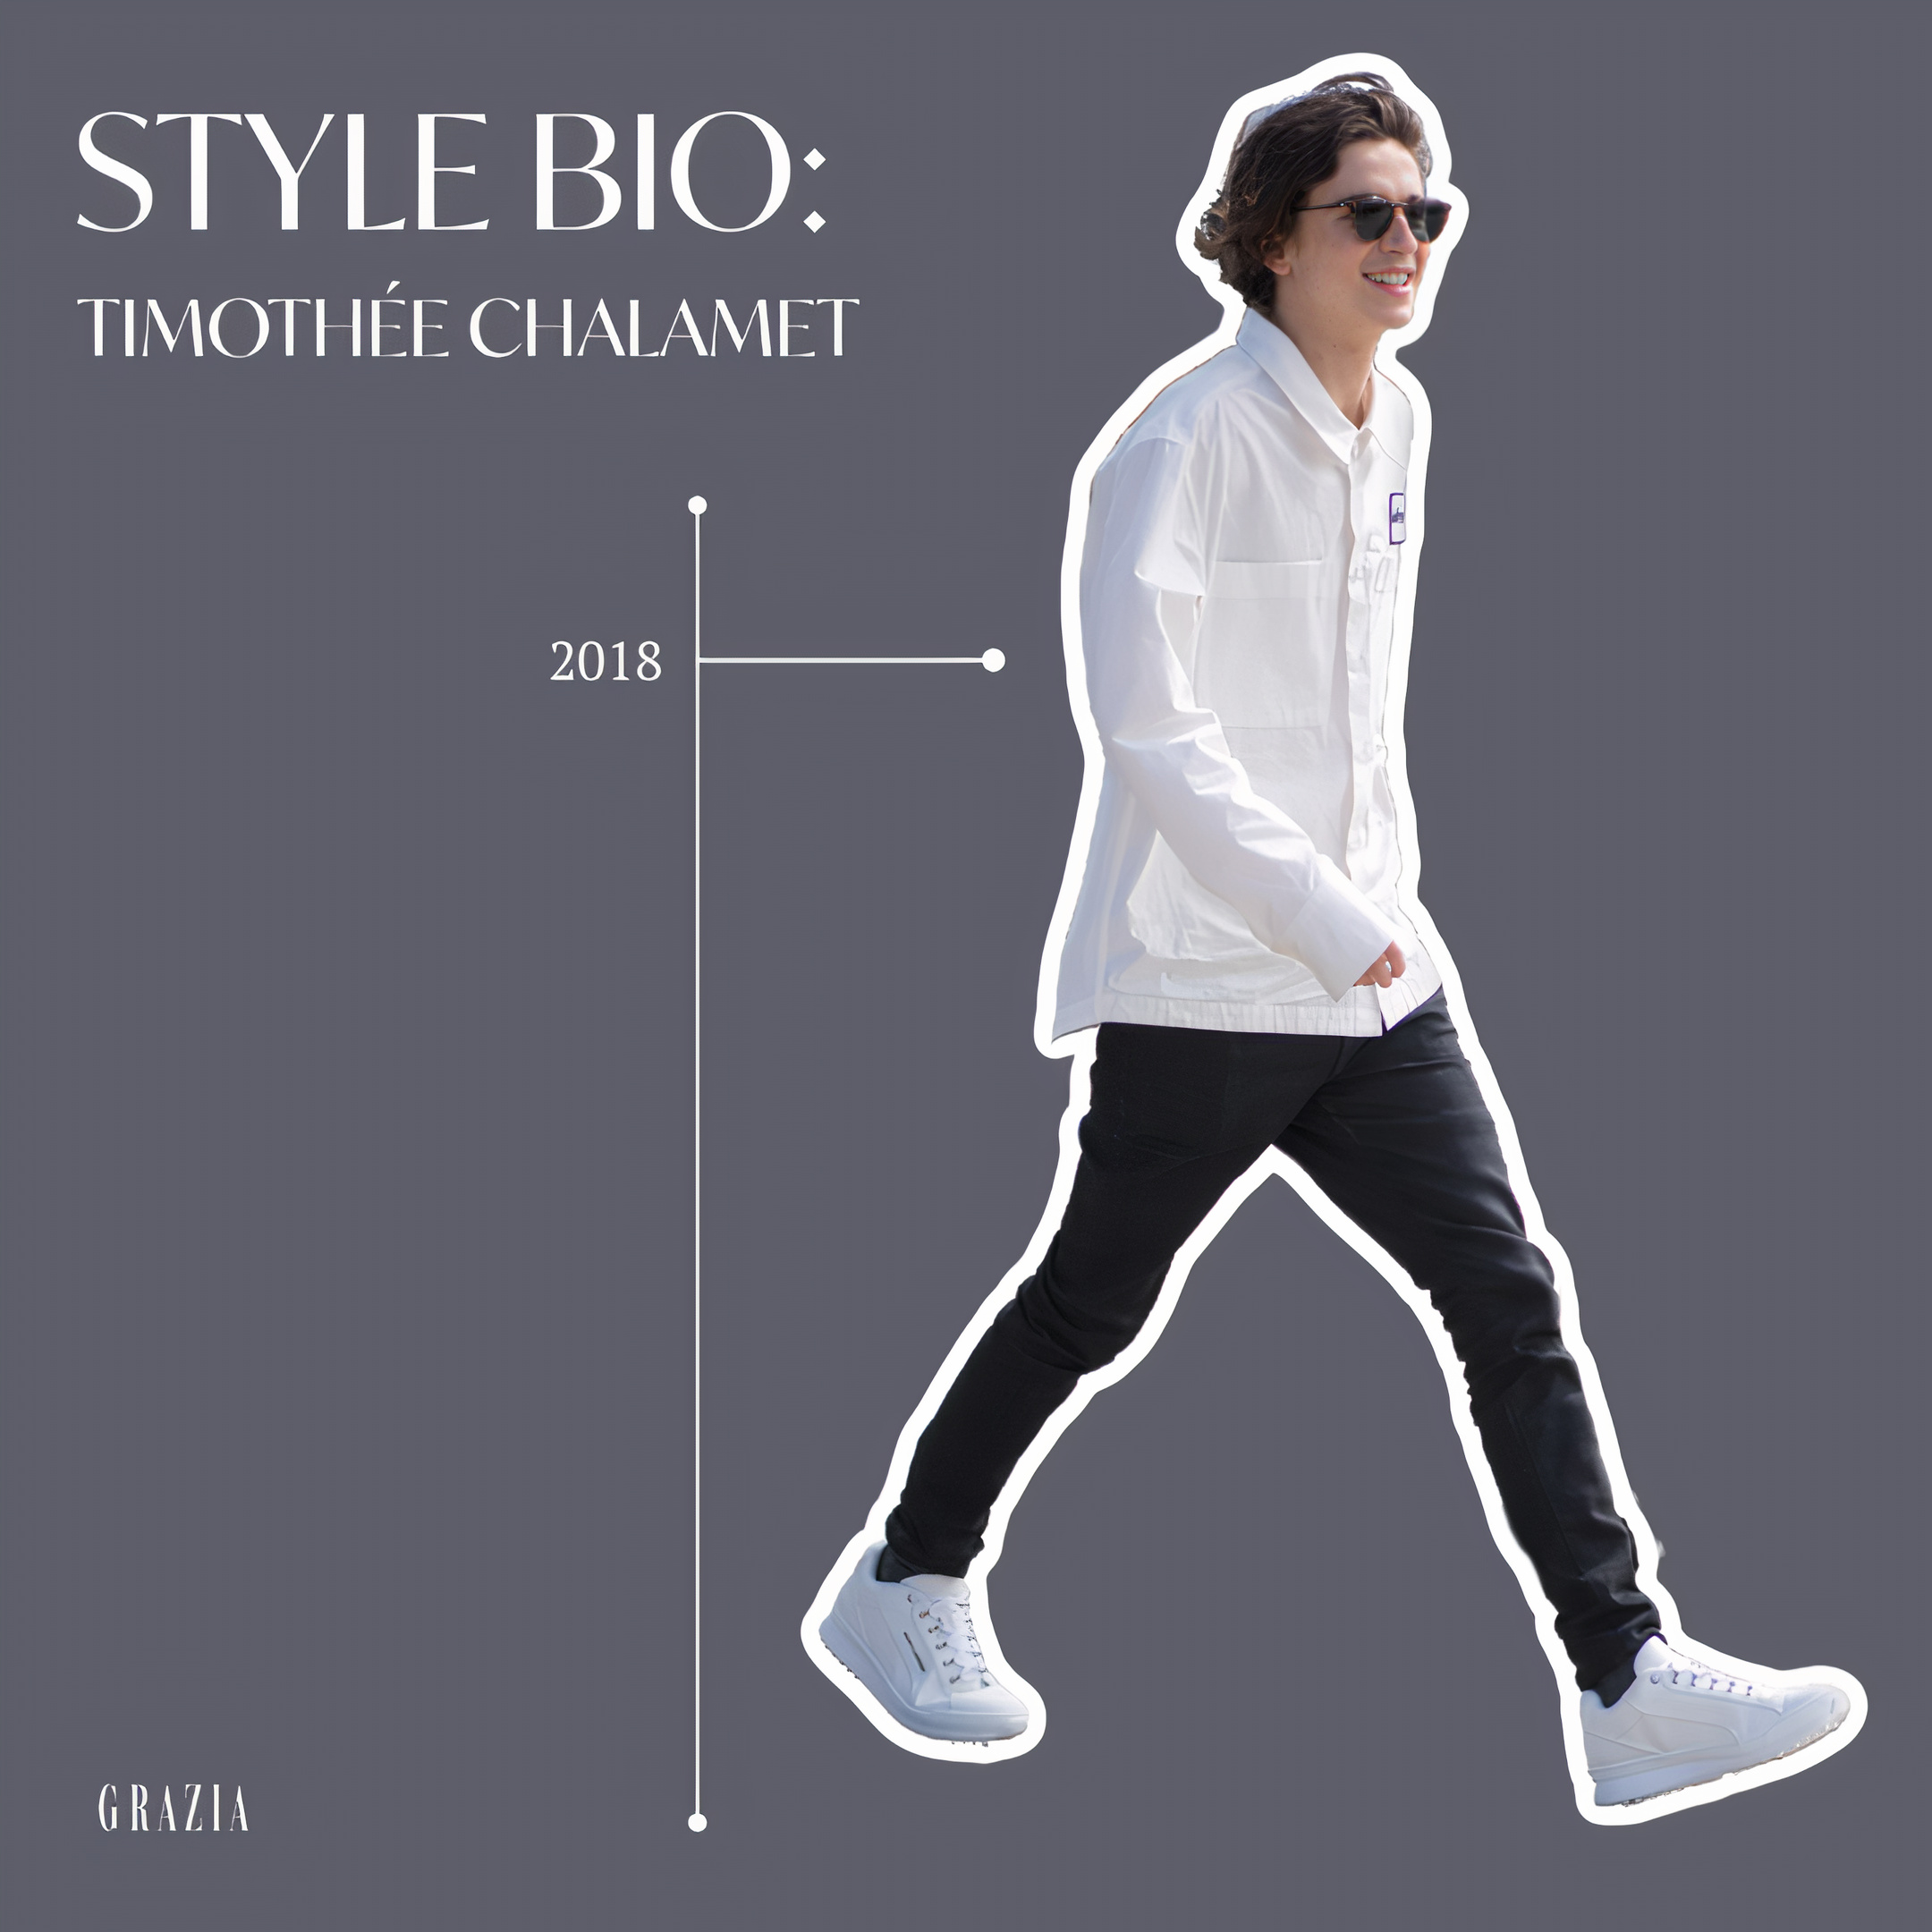 style bio: Timothée Chalamet